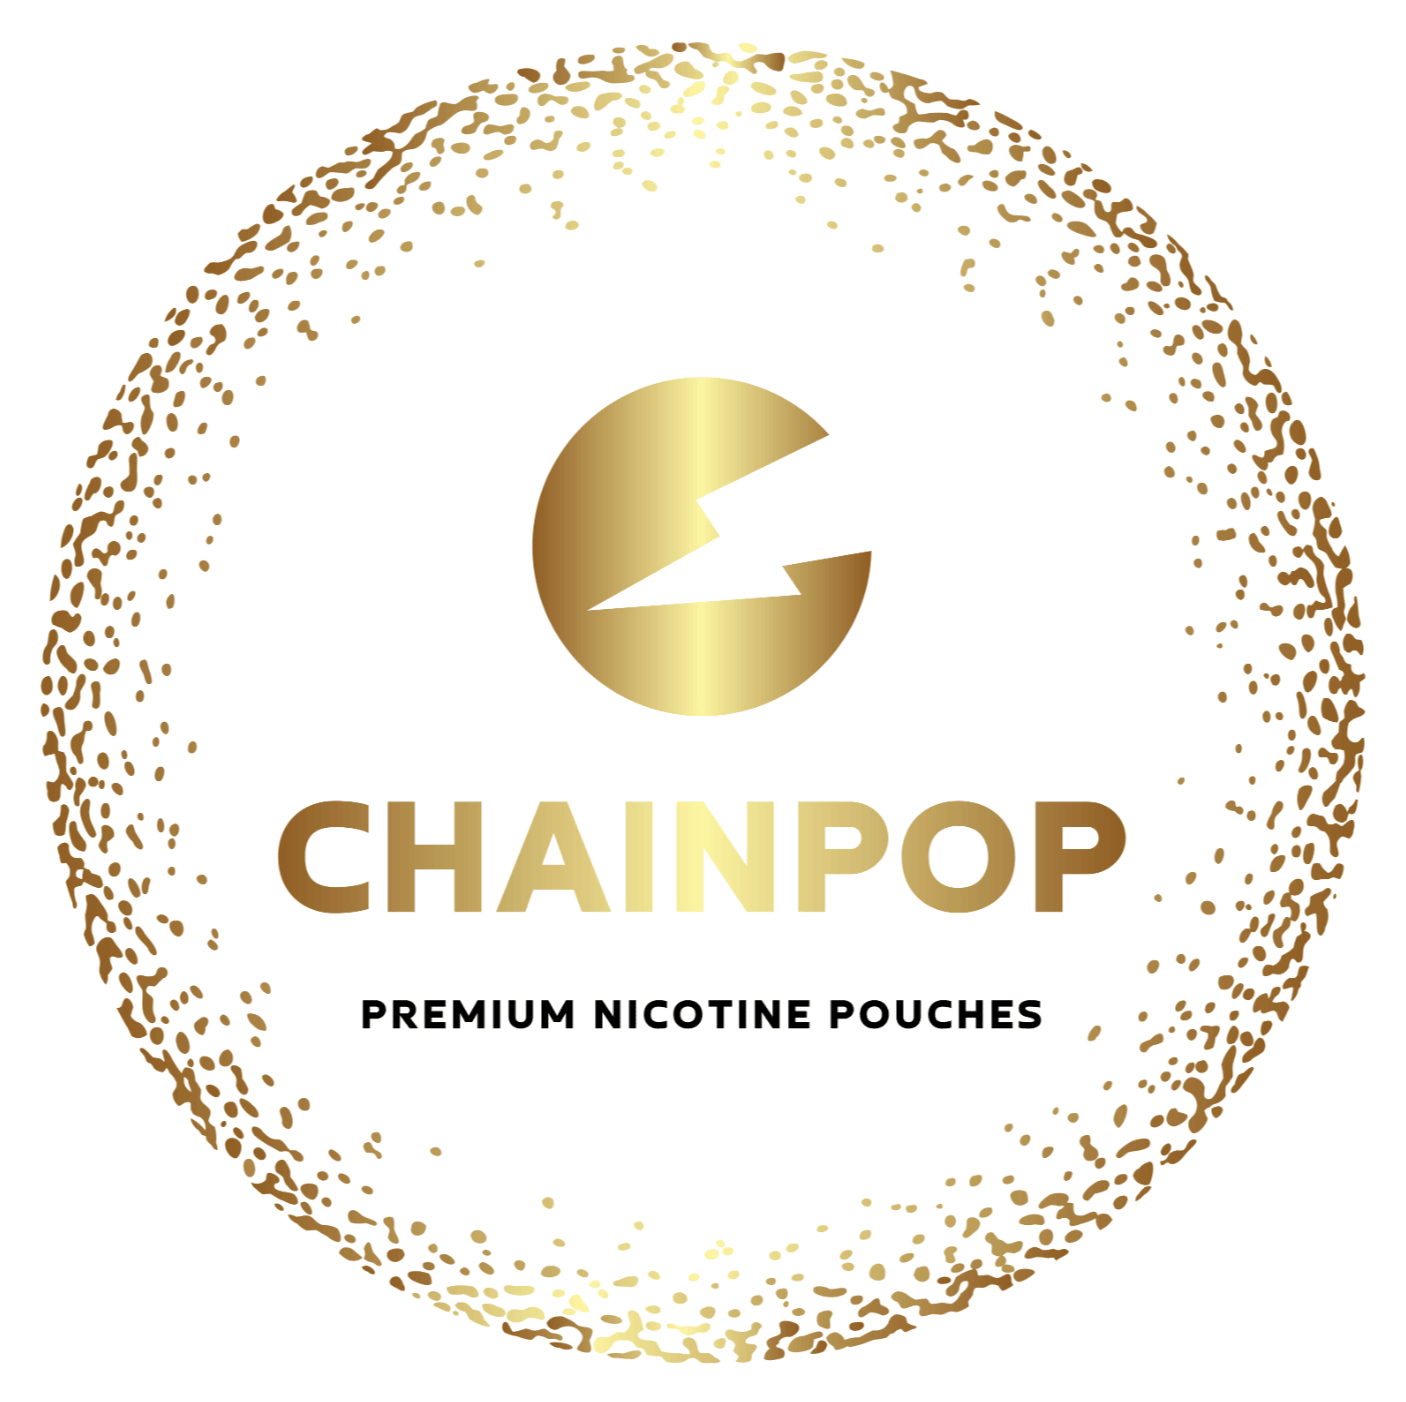 Chainpop nikotinske vrećice logo